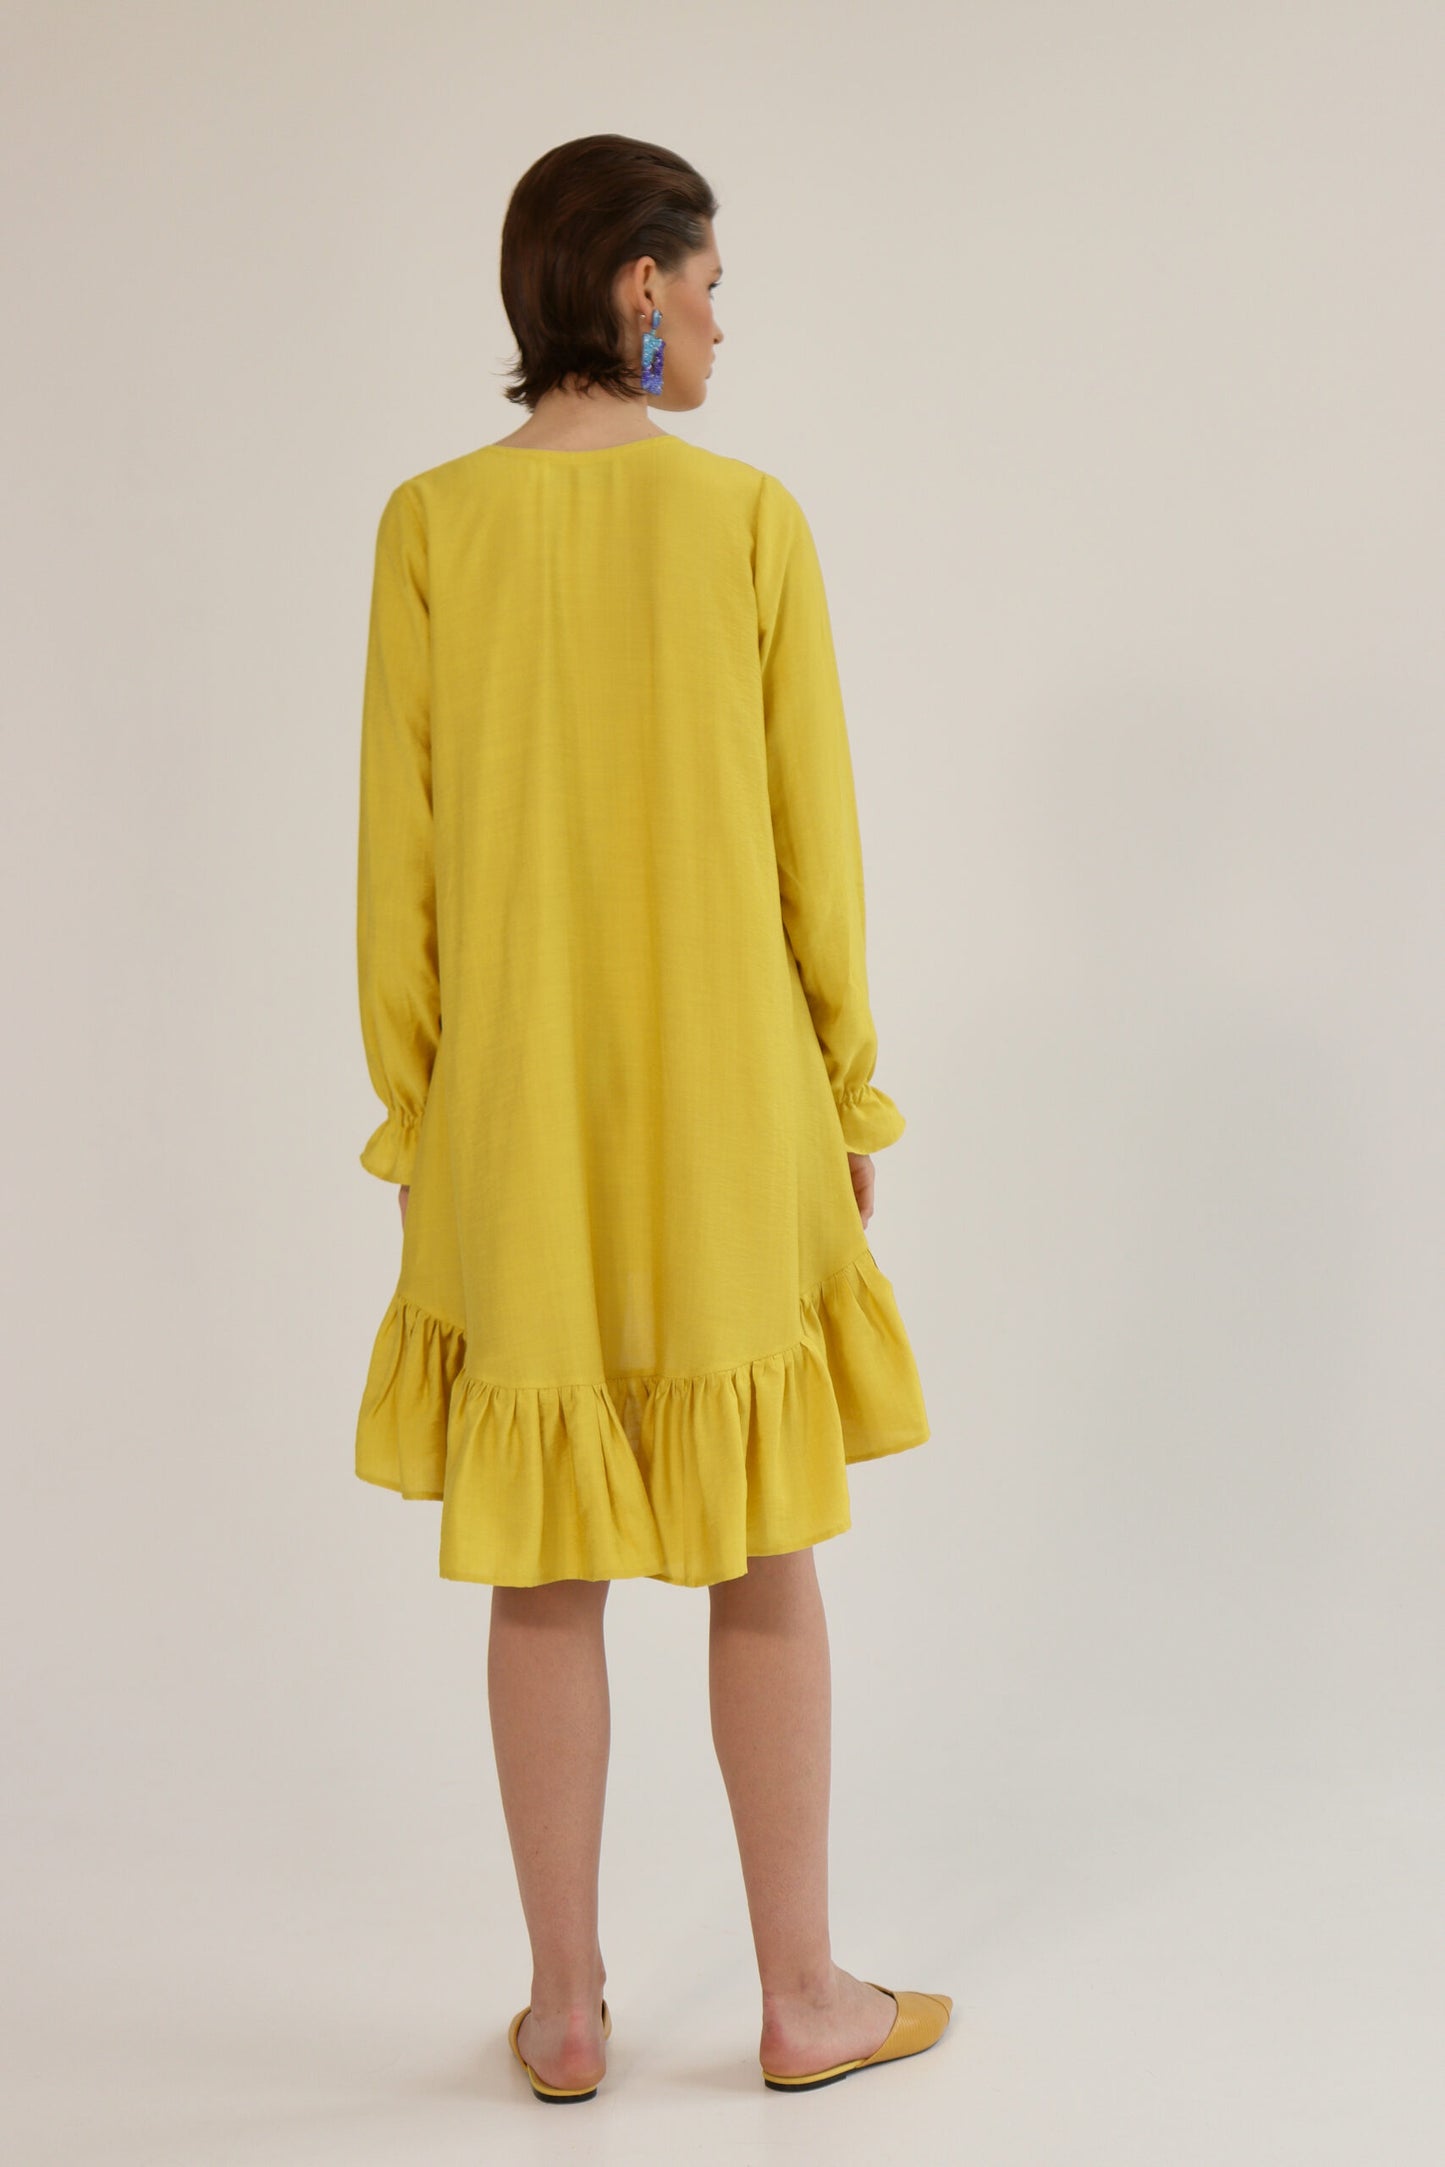 Yellow dress with ruffles, mini length